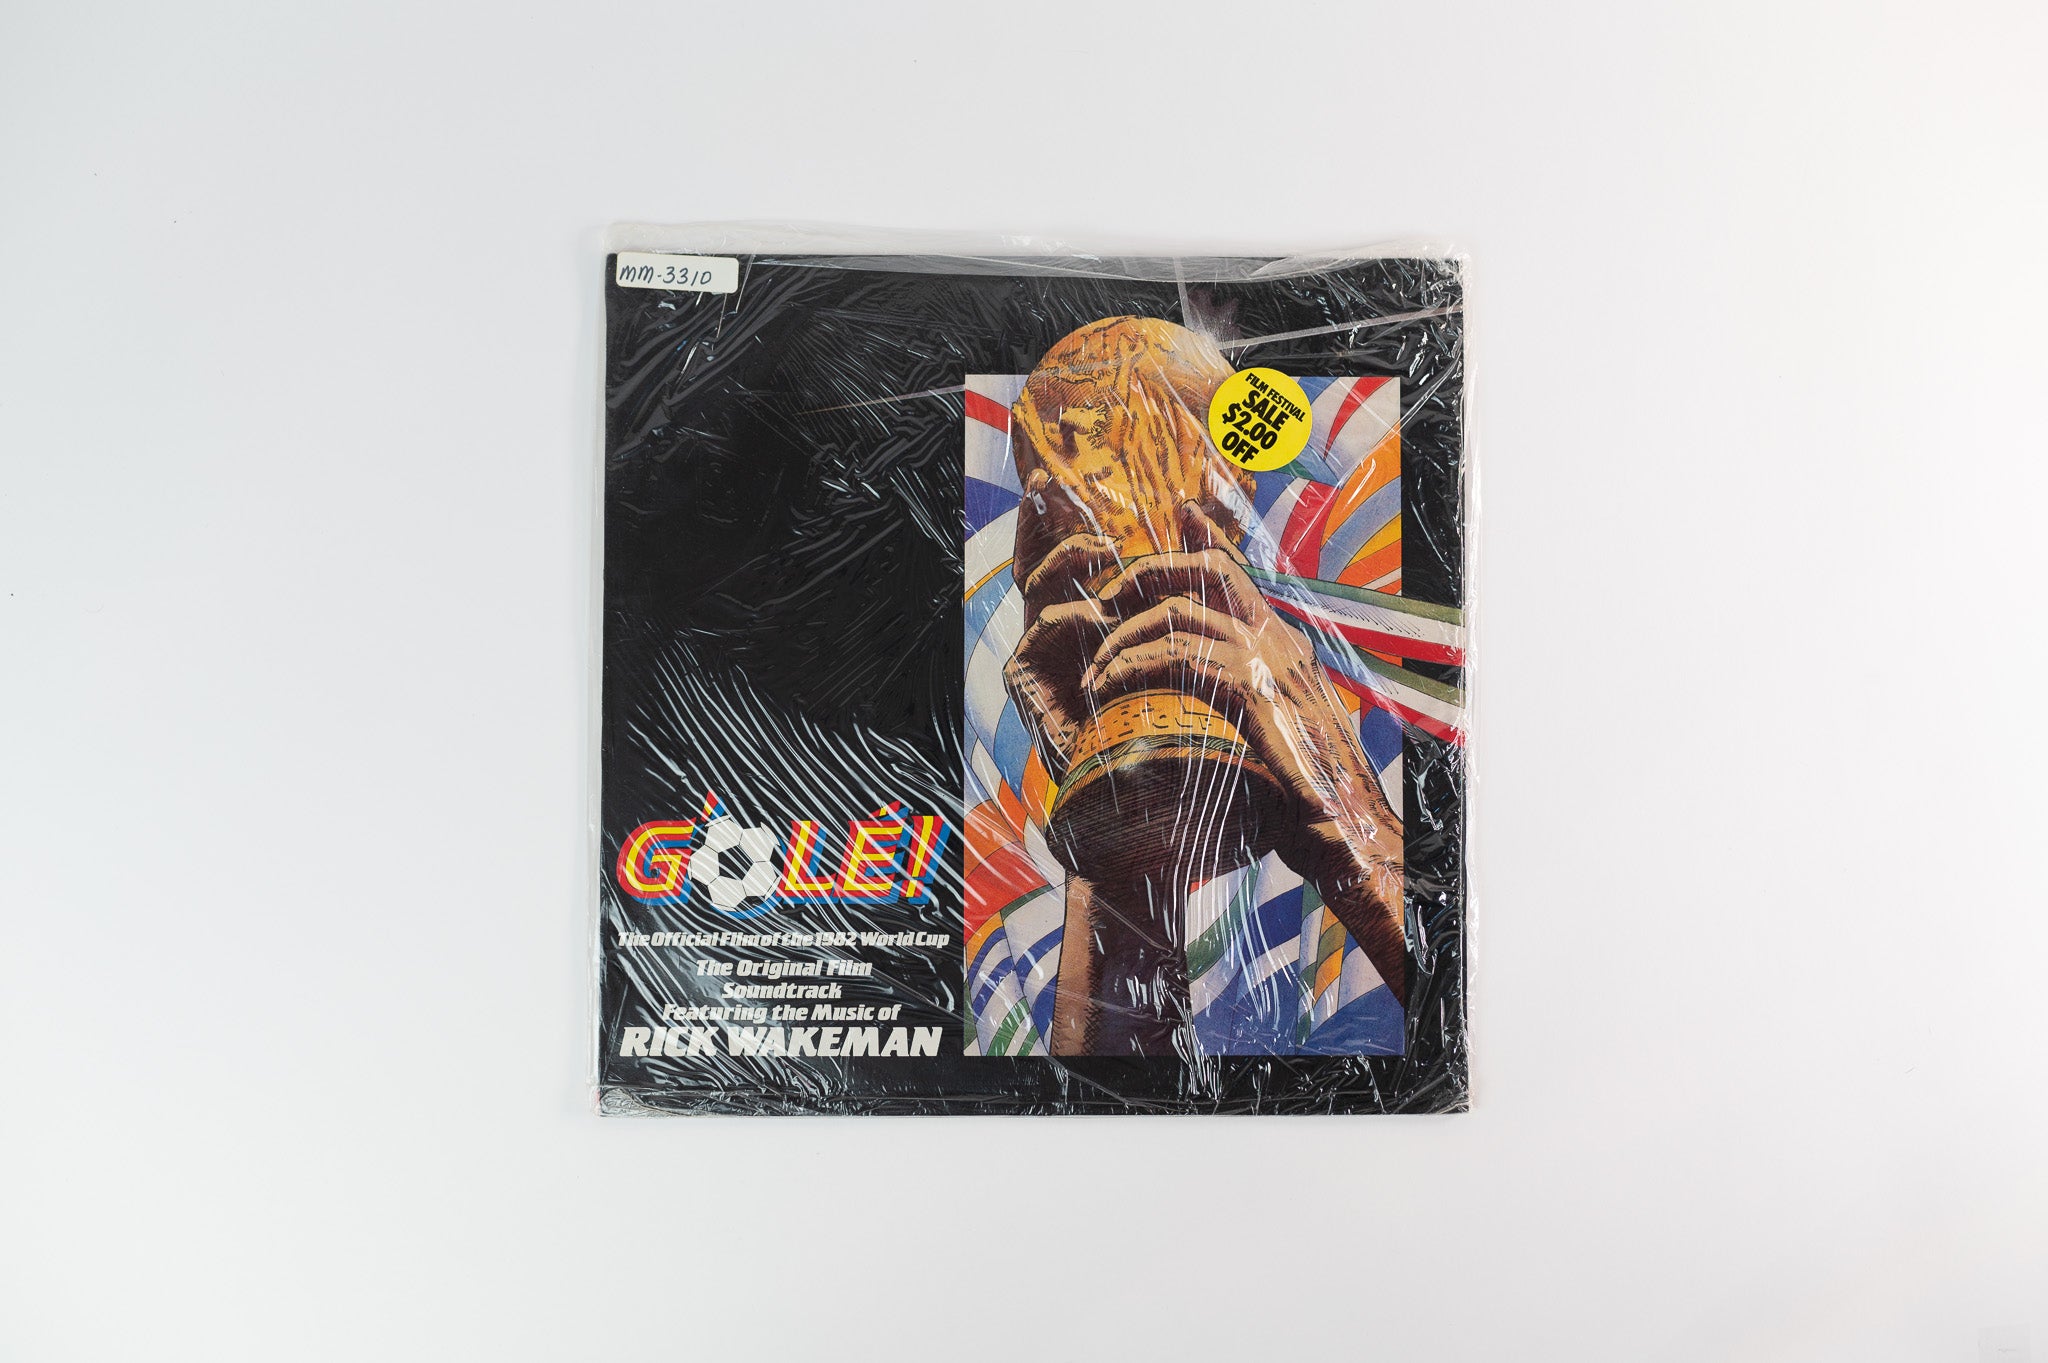 Rick Wakeman - G'Olé! 1982 World Cup (Original Soundtrack) on Charisma Sealed